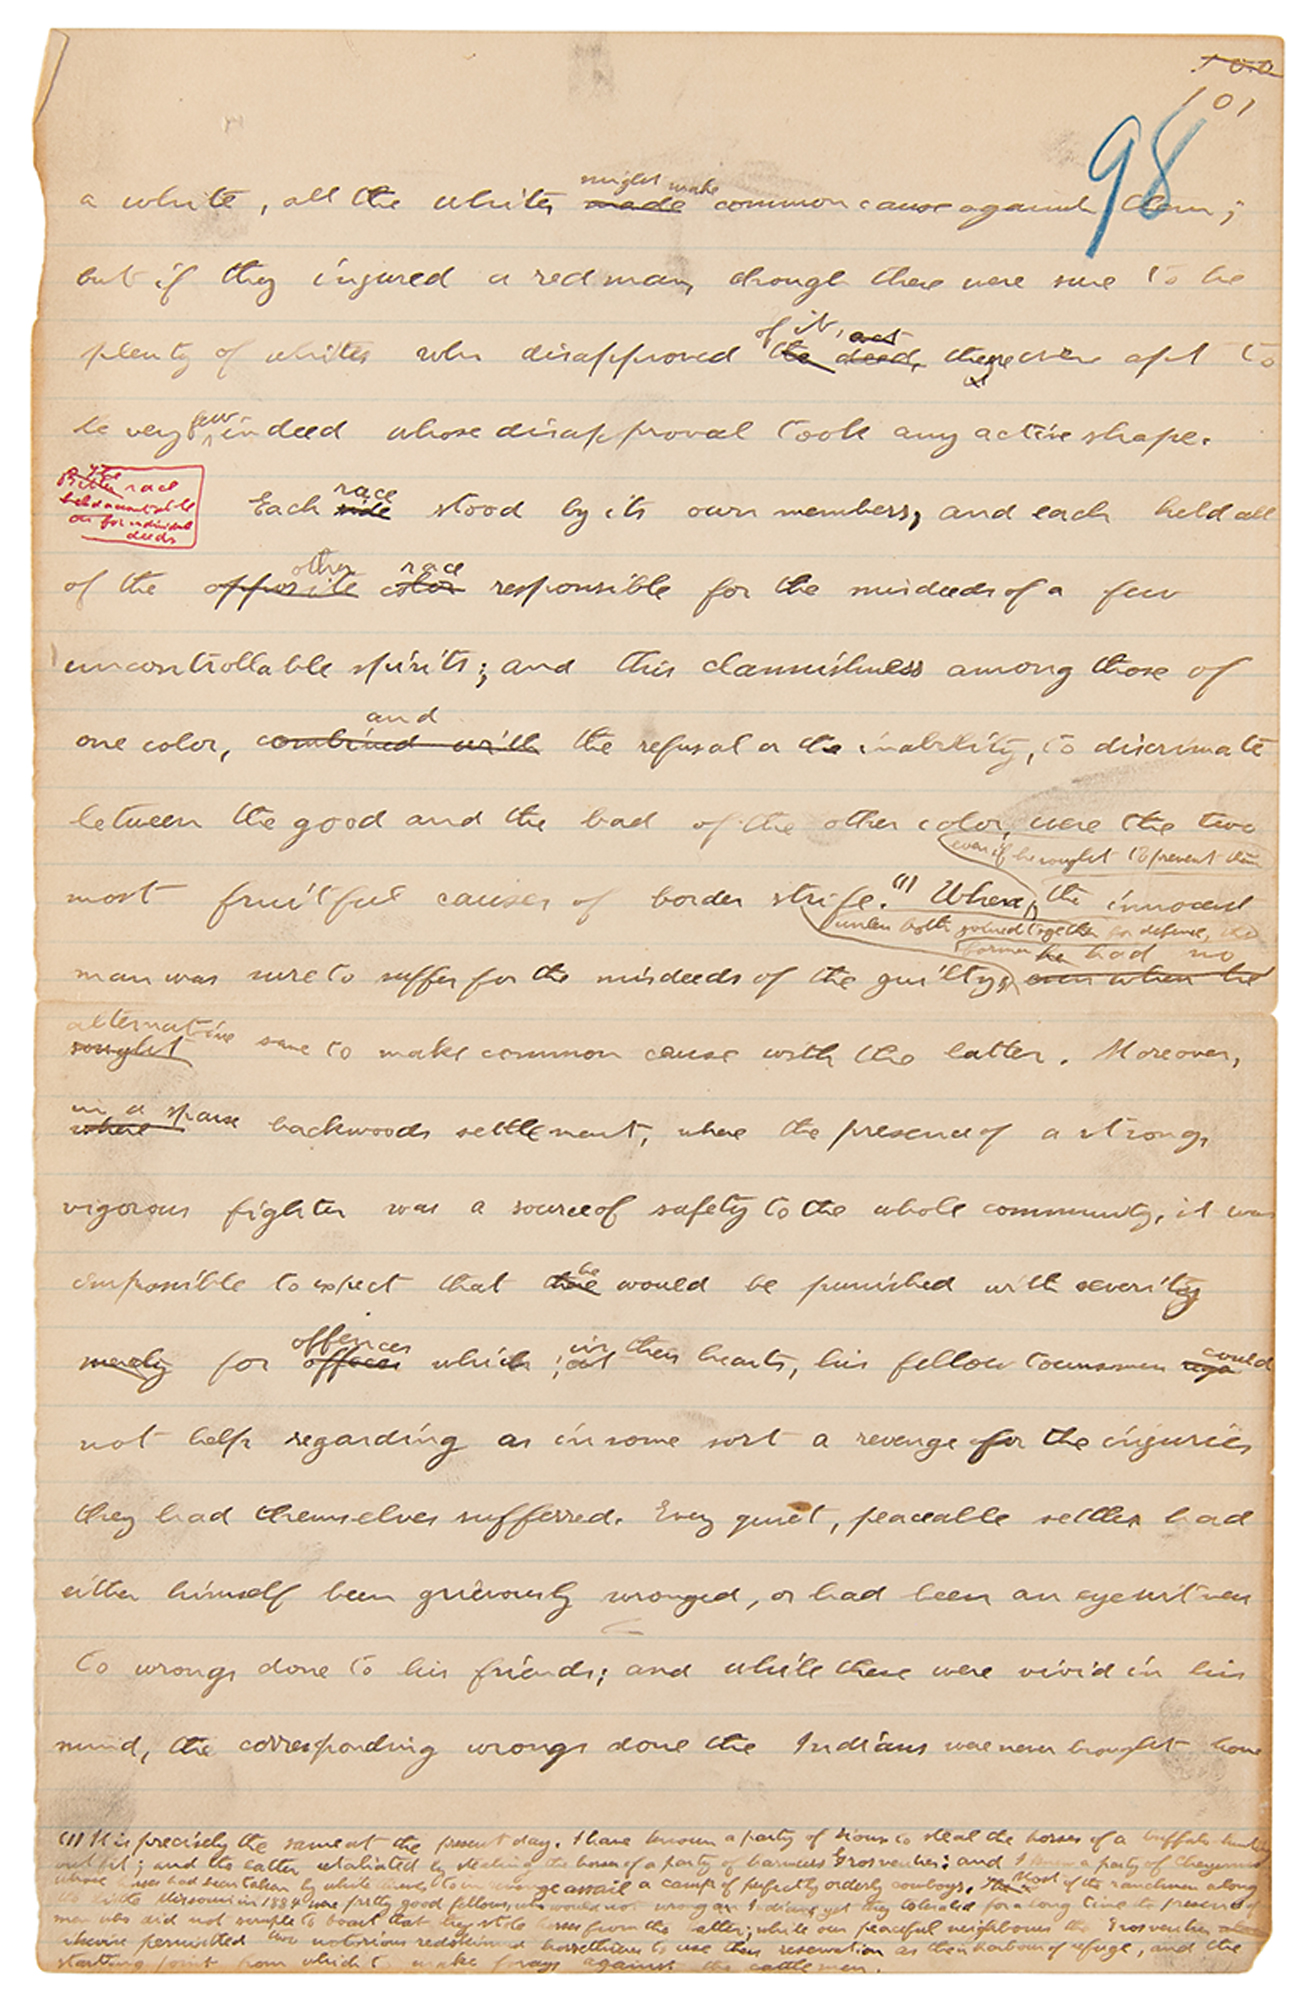 Lot #58 Theodore Roosevelt Handwritten Manuscript on Native Americans